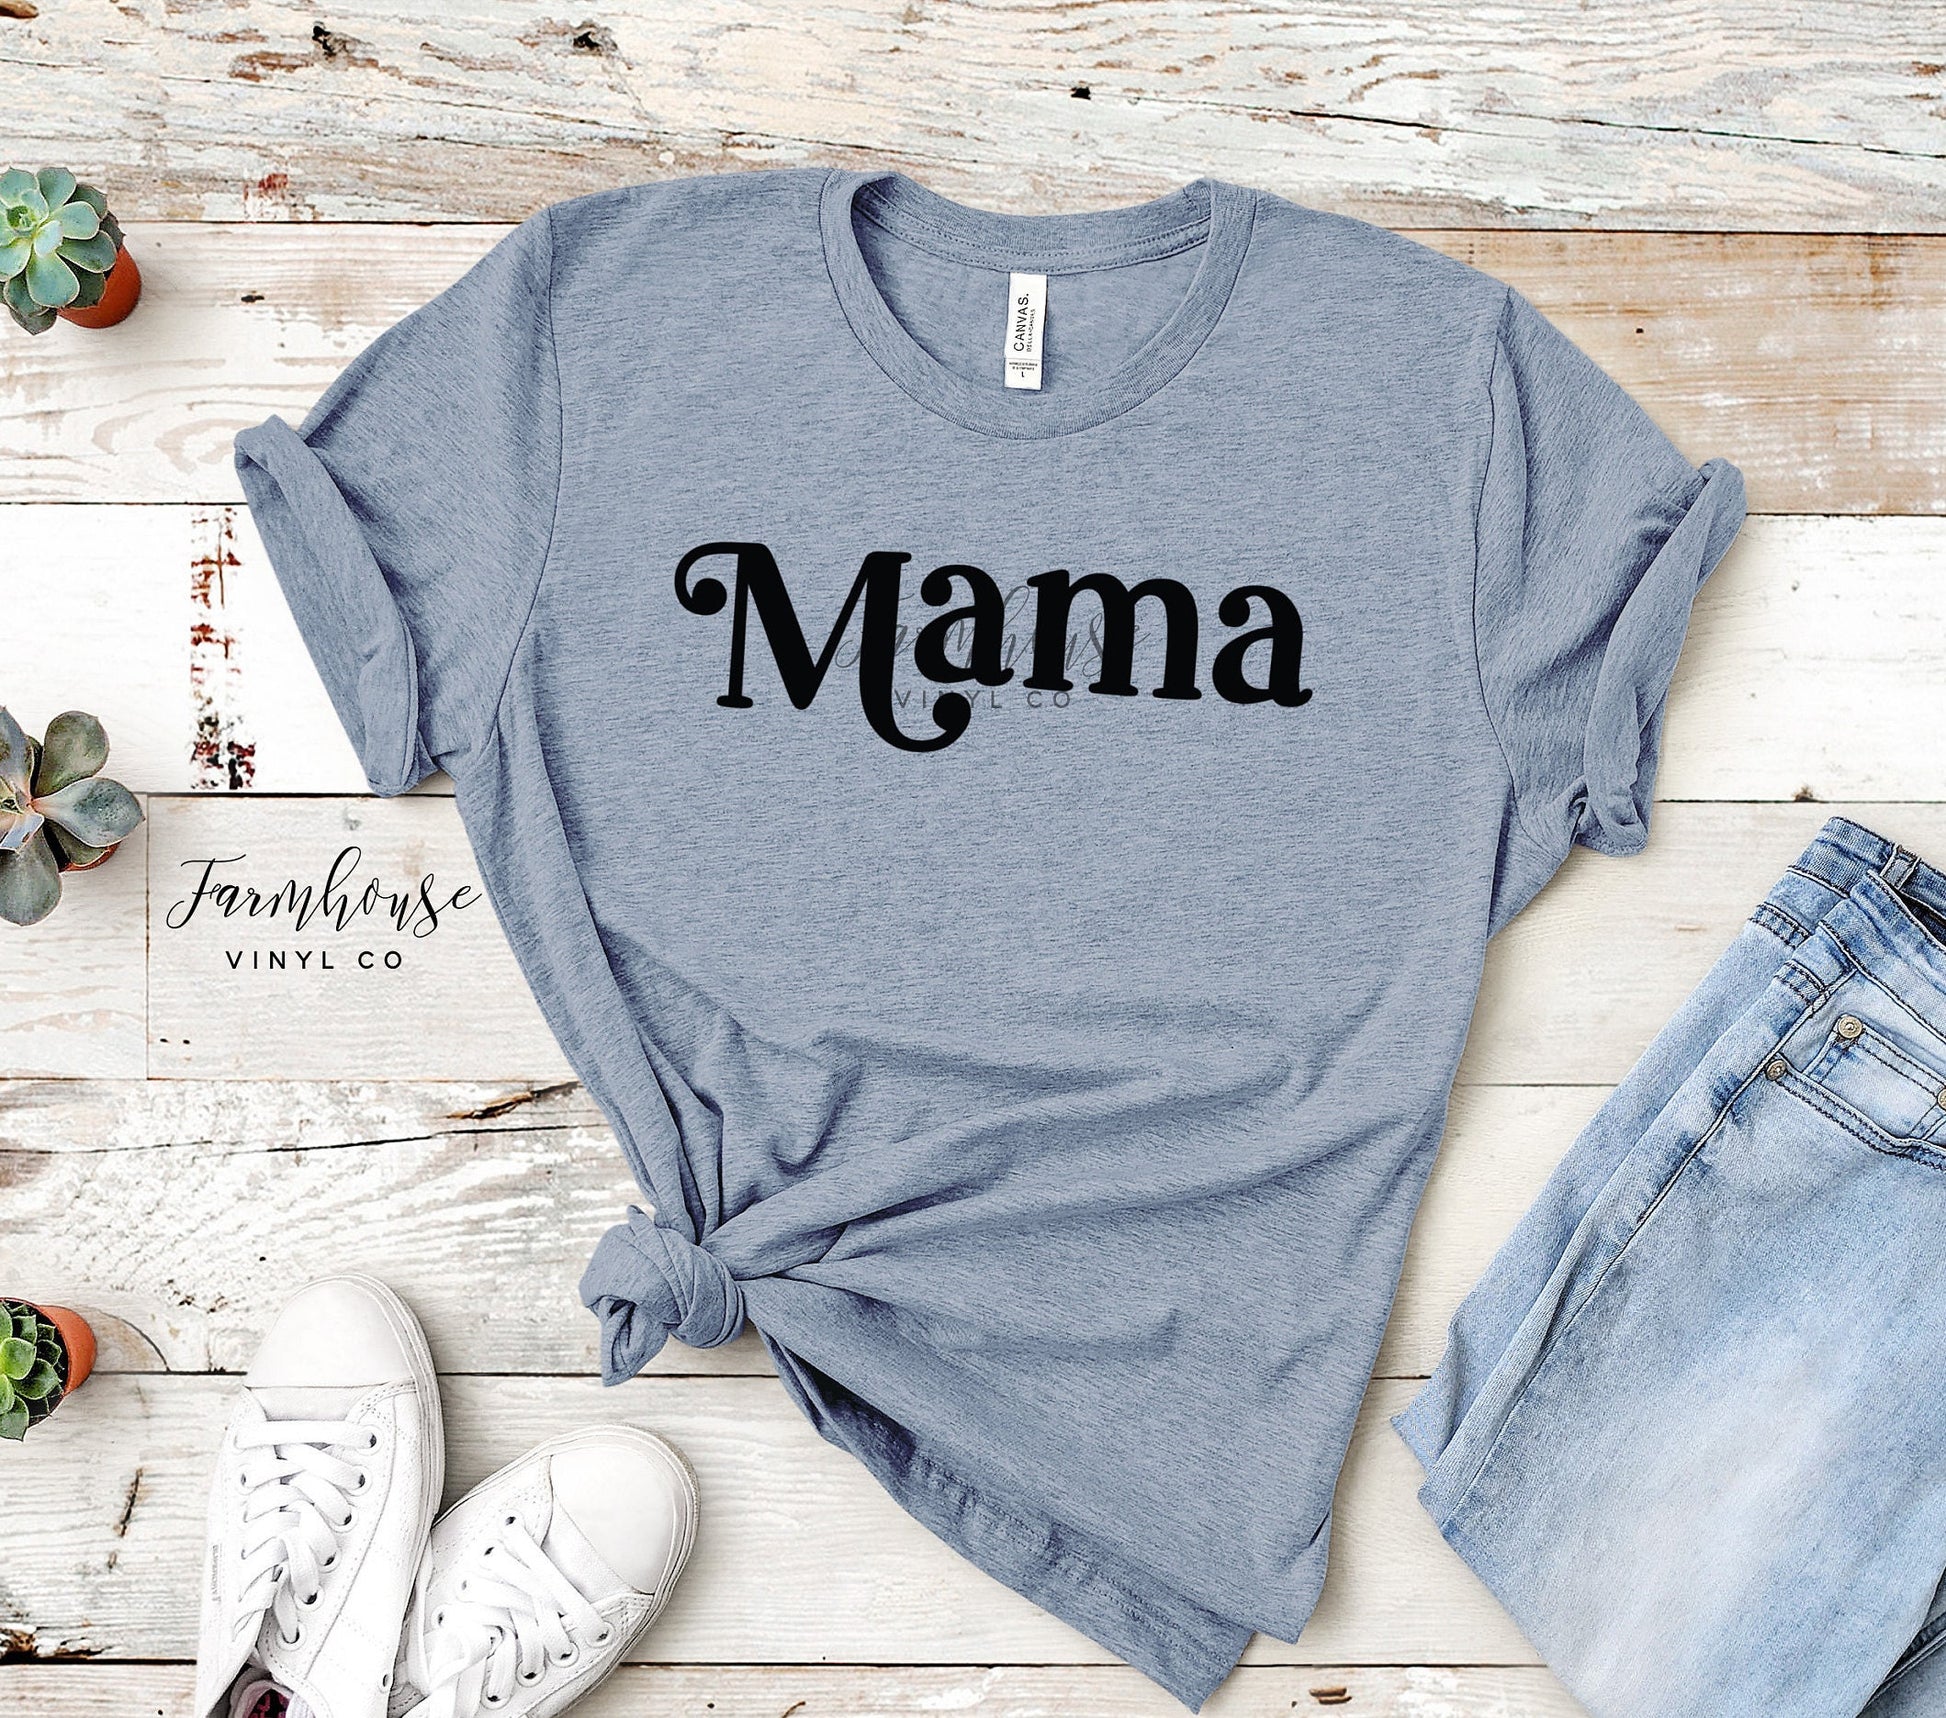 Shine On Mama Tee Shirt~Mom Shirt Collection~Mom Tee Shirts~Mom Tee~Mom Shirts~SAHM~Mothers Day Gift~Homeschool Mom~Raise Them Up Kind - Farmhouse Vinyl Co